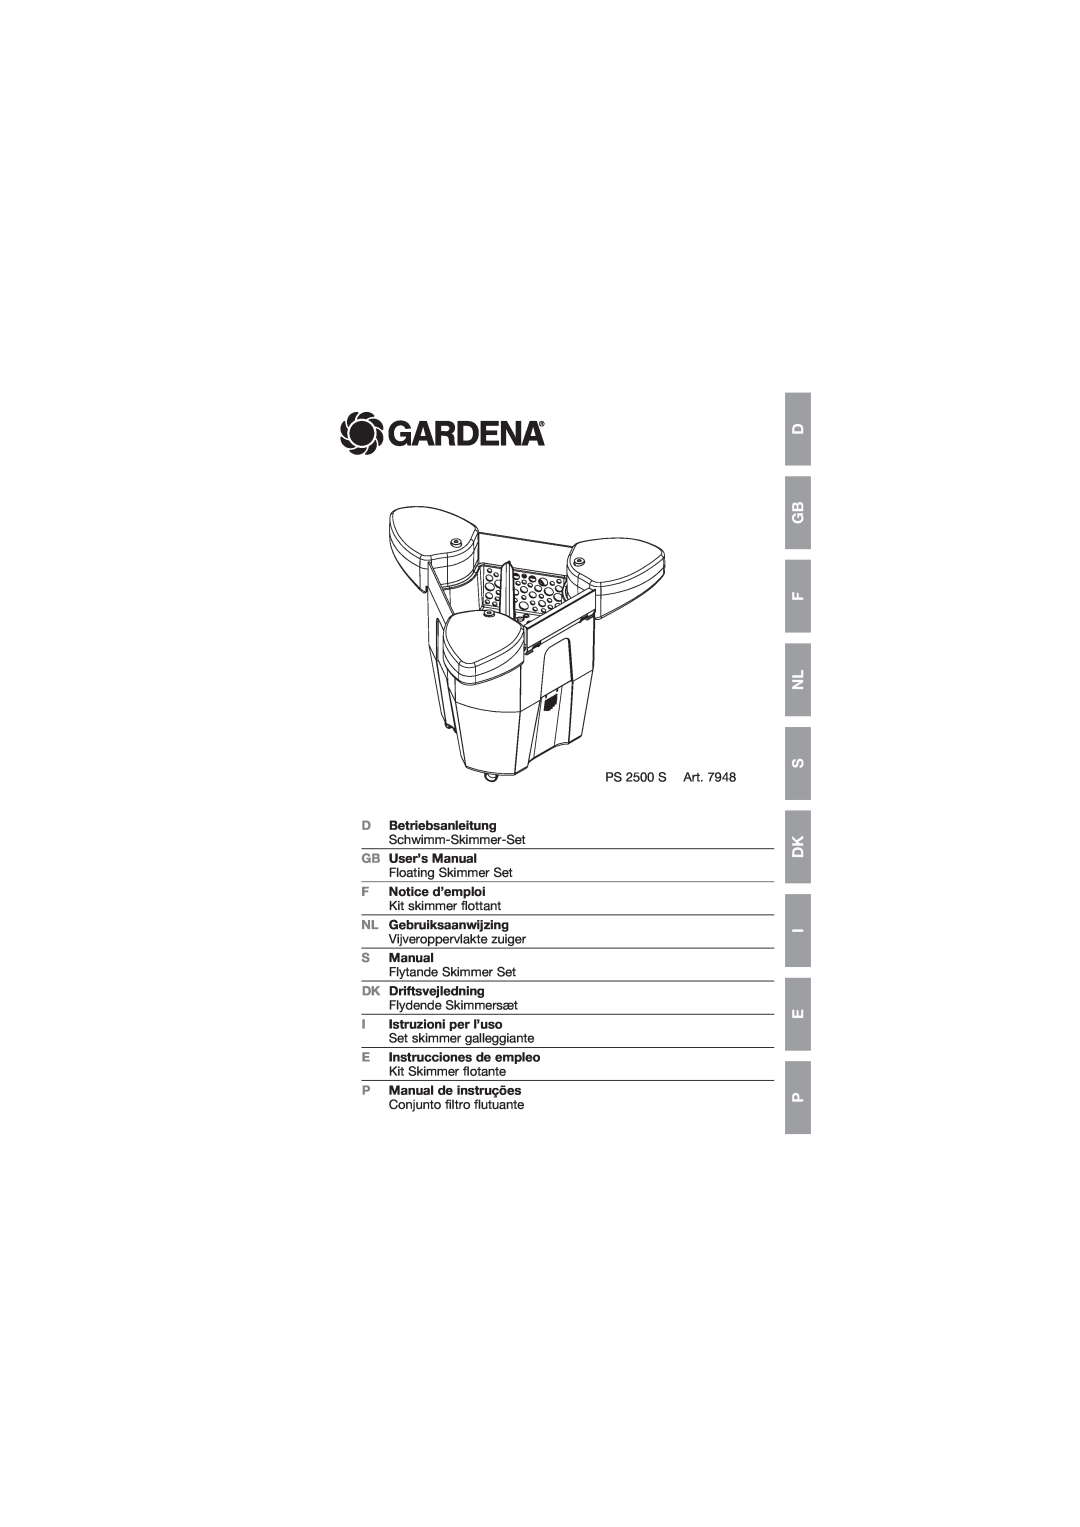 Gardena PS 2500 S user manual D Gb F Nl S, Dk I E P, D Betriebsanleitung Schwimm-Skimmer-Set GB User’s Manual, S Manual 